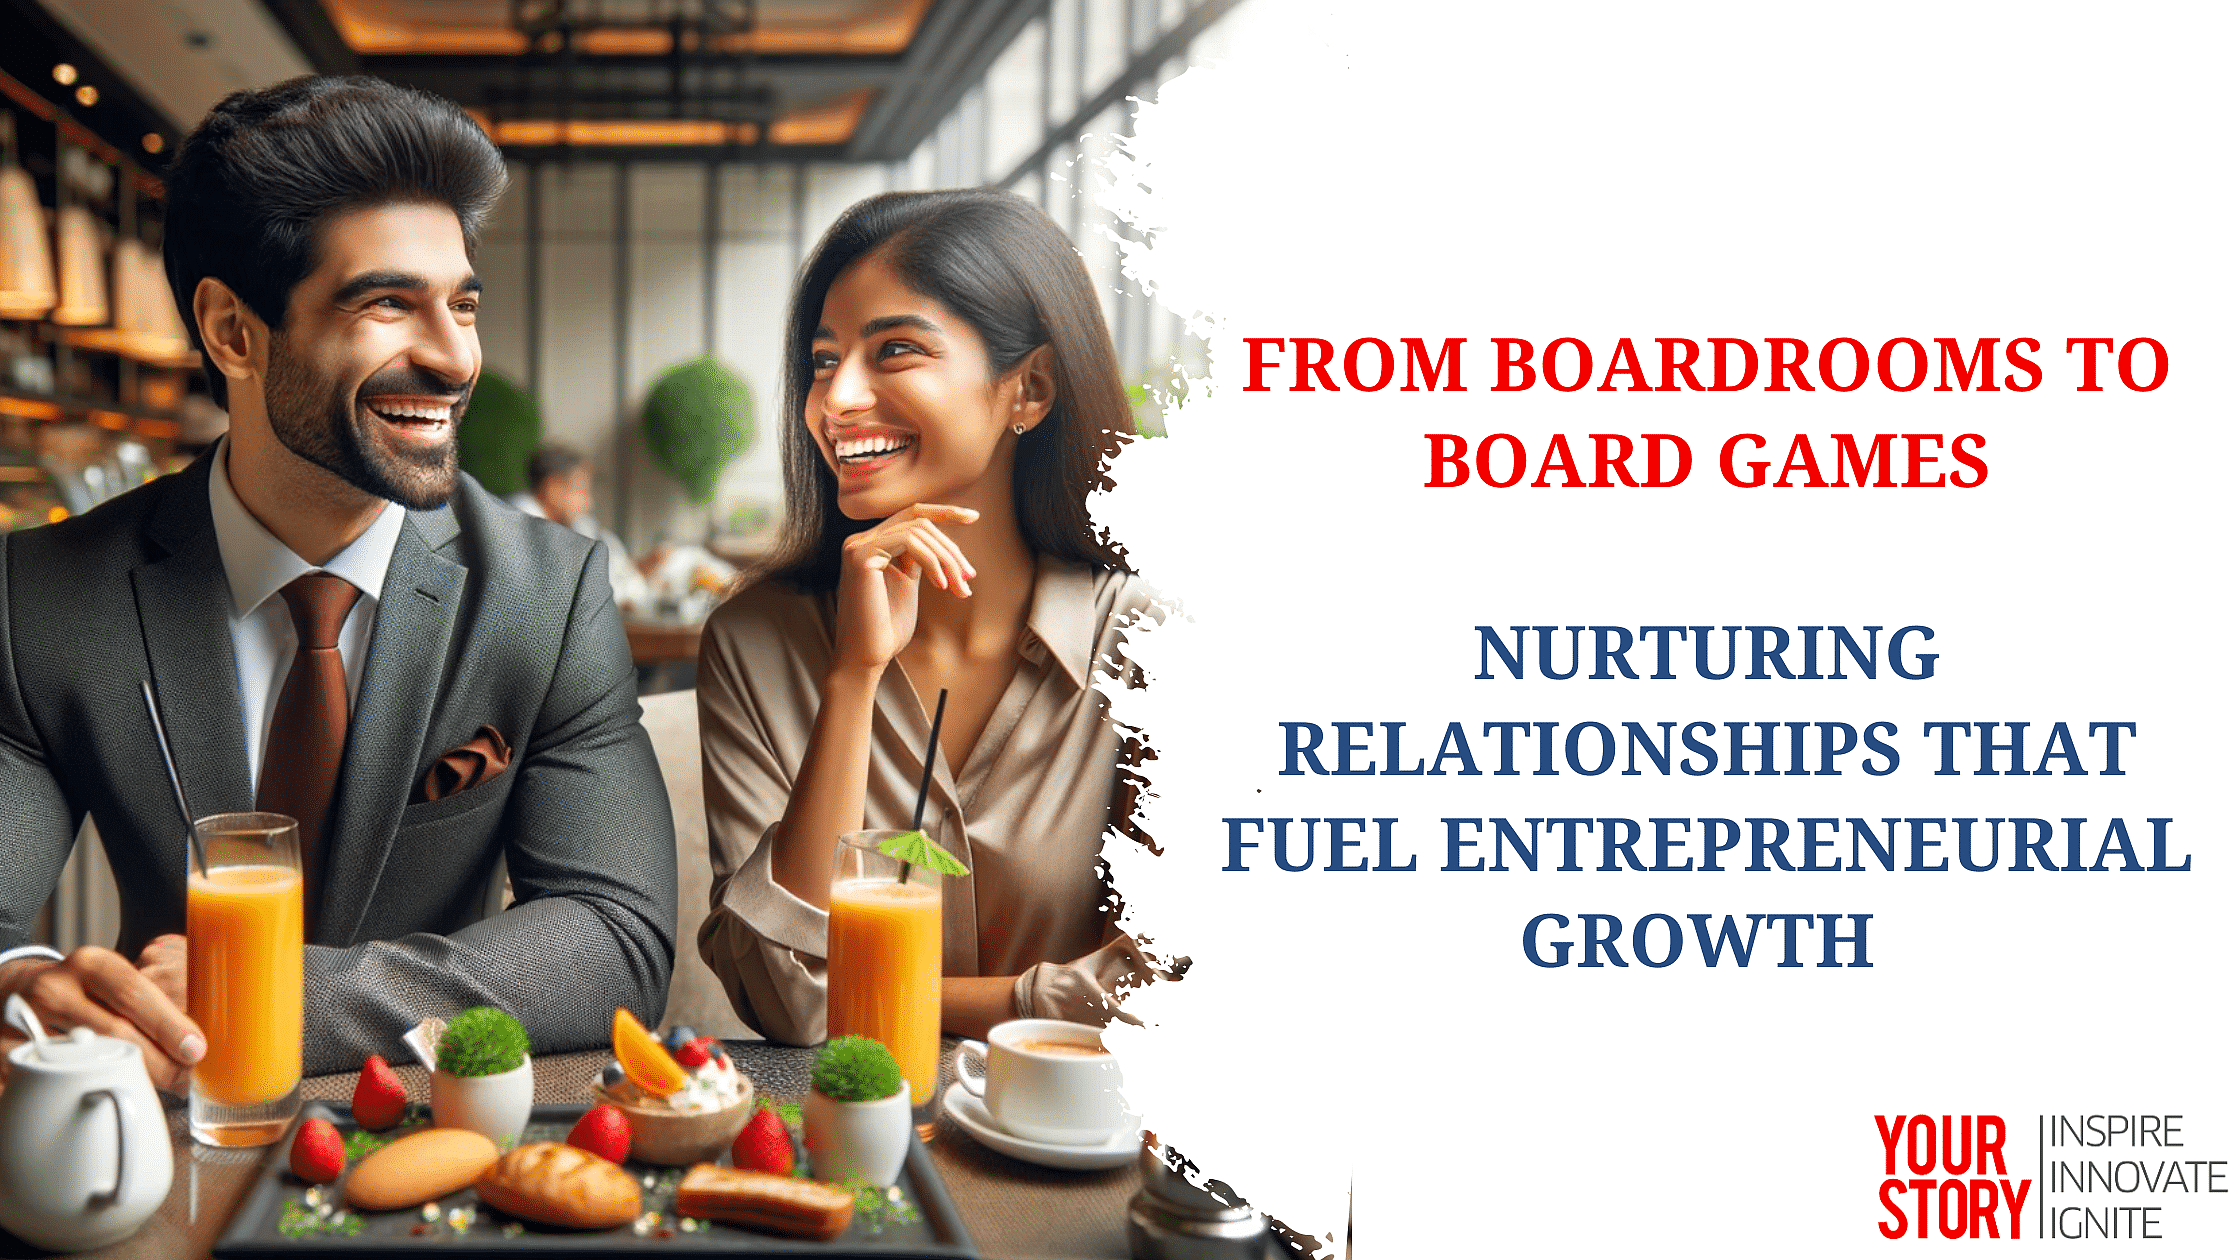 From Boardrooms to Board Games: Nurturing Entrepreneur Relations